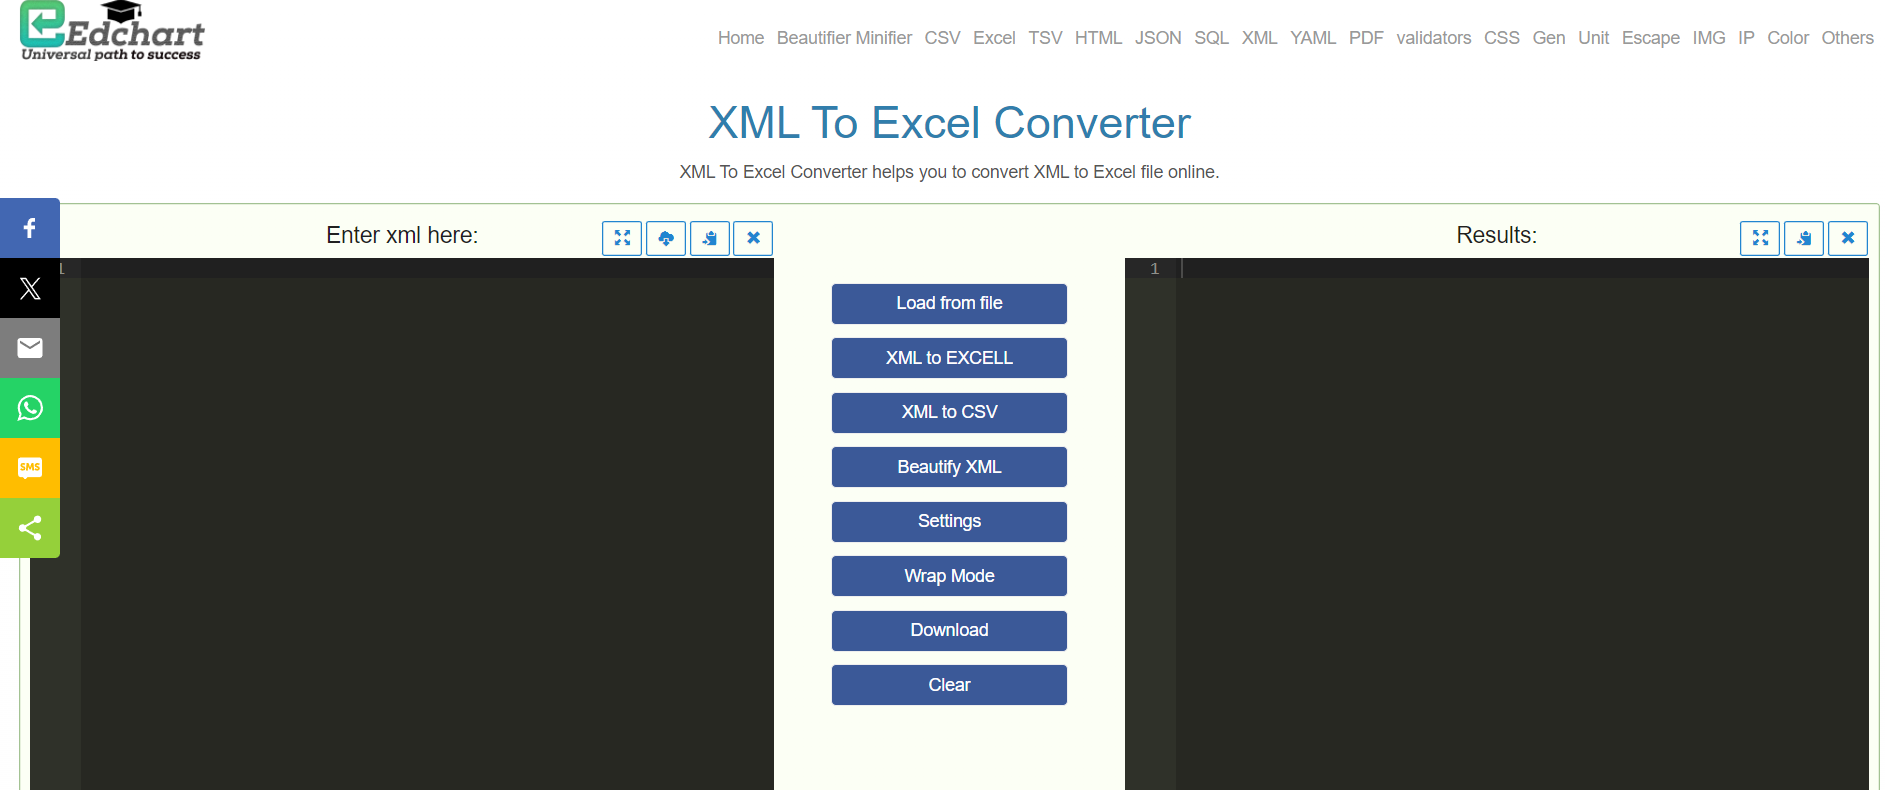 Edchart XML To Excel Converter